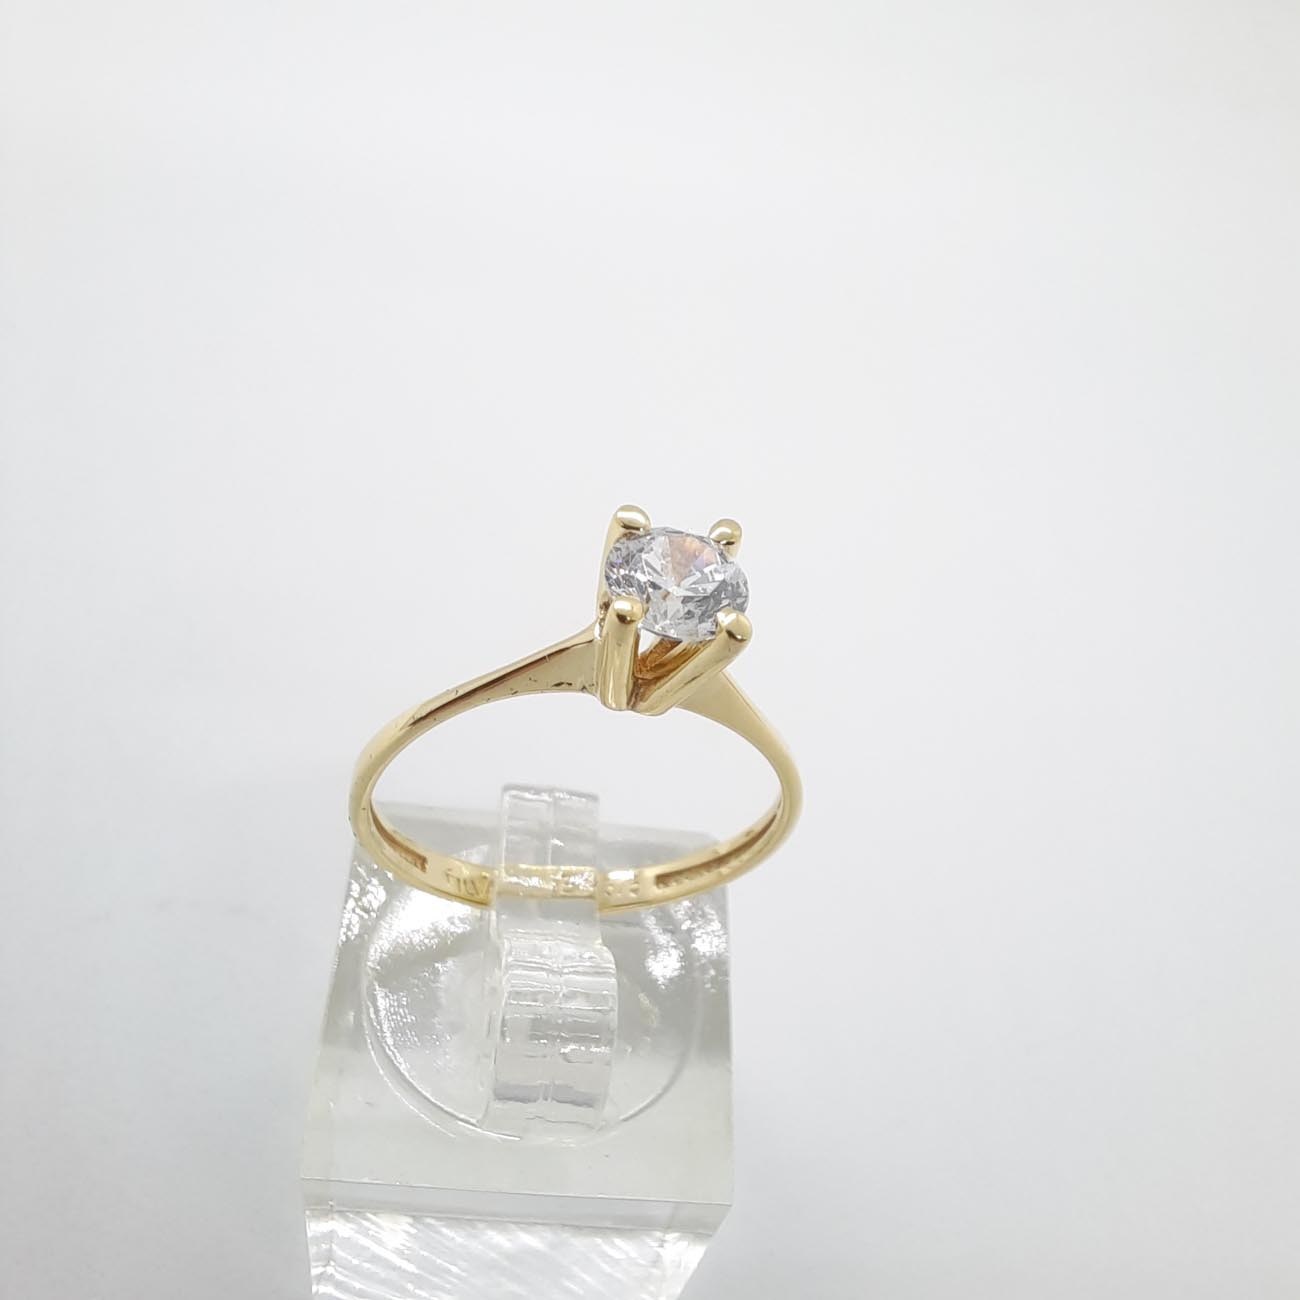 Shiny bride χρυσό δαχτυλίδι ζιργκόν